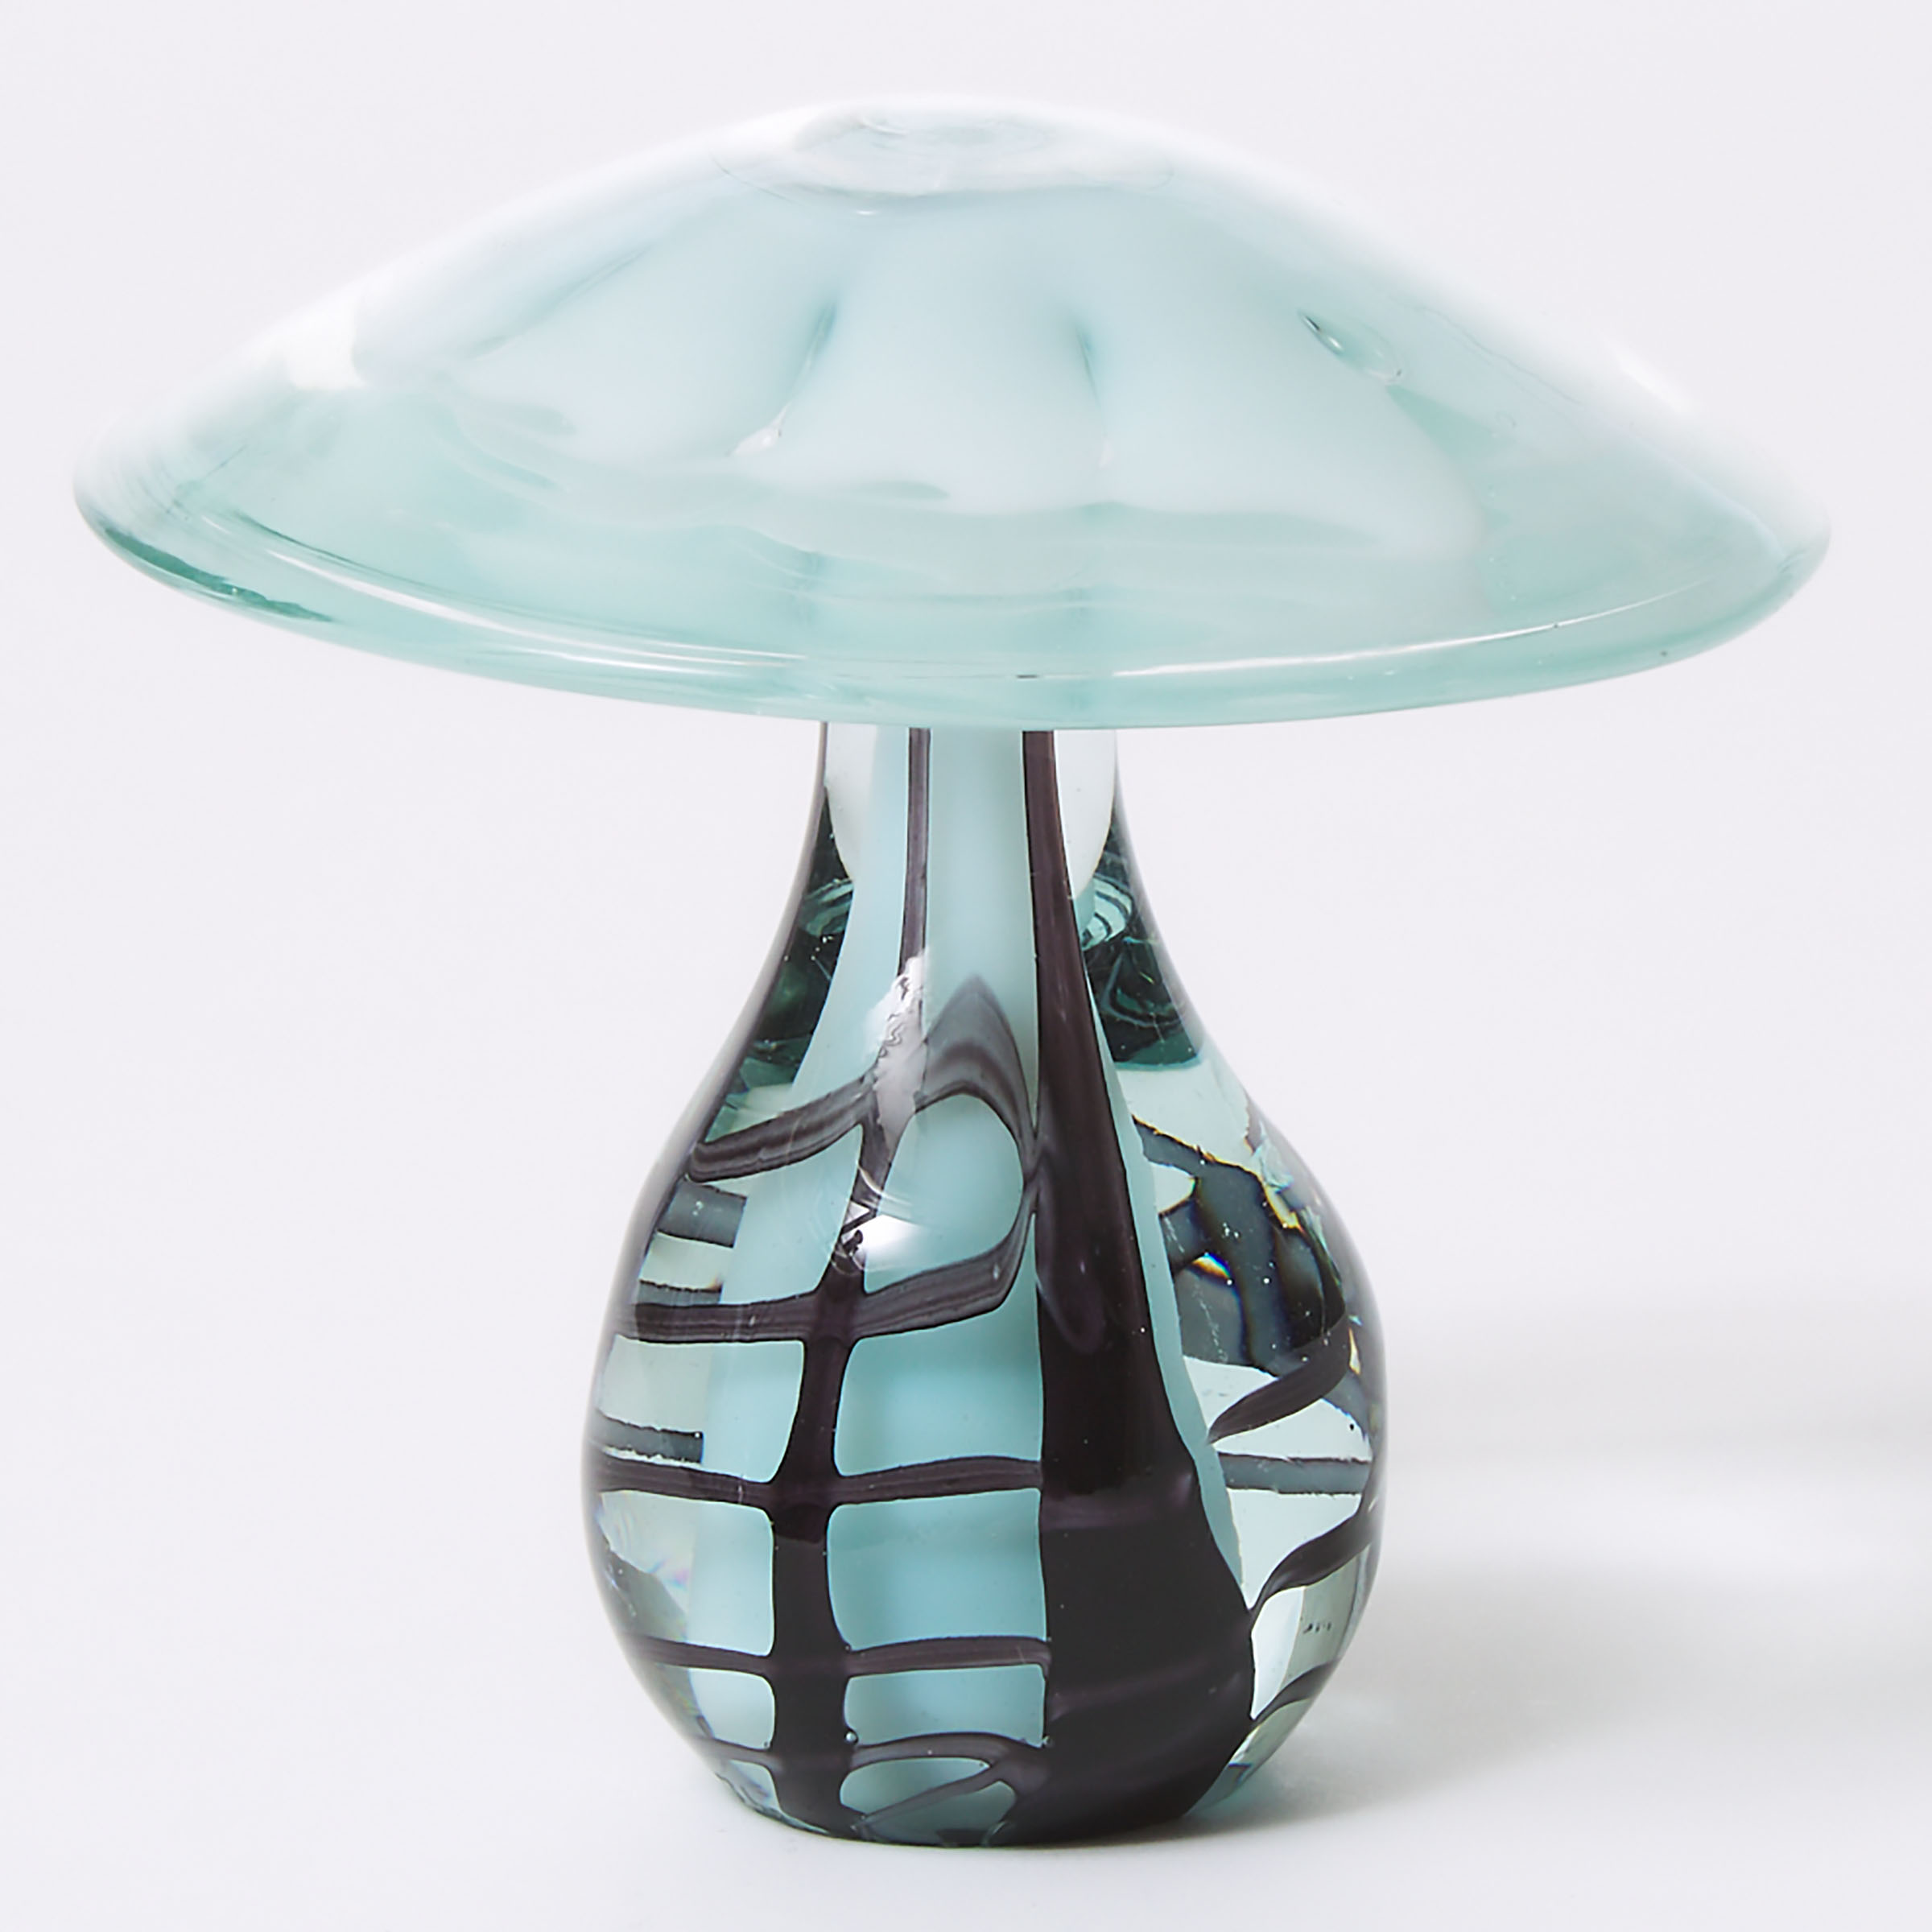 Martin Demaine (American-Canadian, b. 1942), Internally Decorated Glass Mushroom, 1976